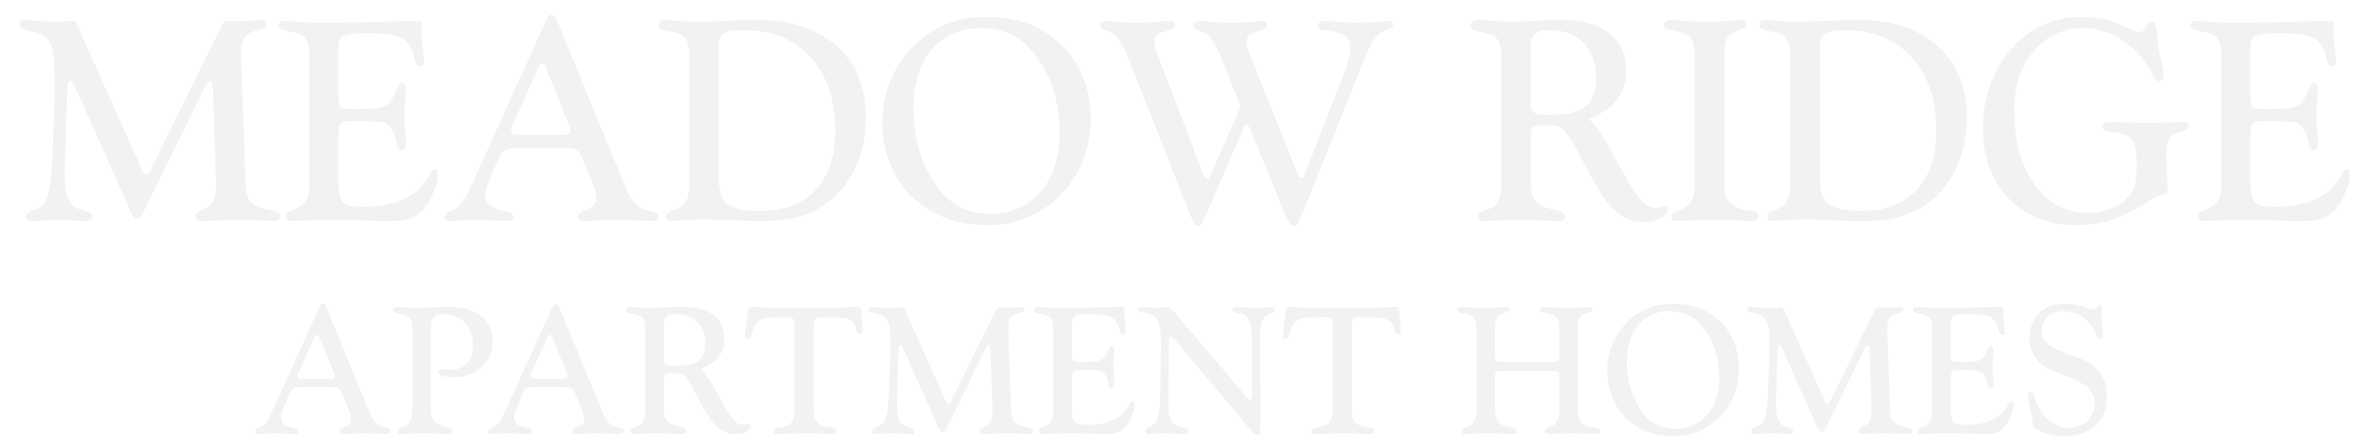 Meadow Ridge Apartment Homes Logo